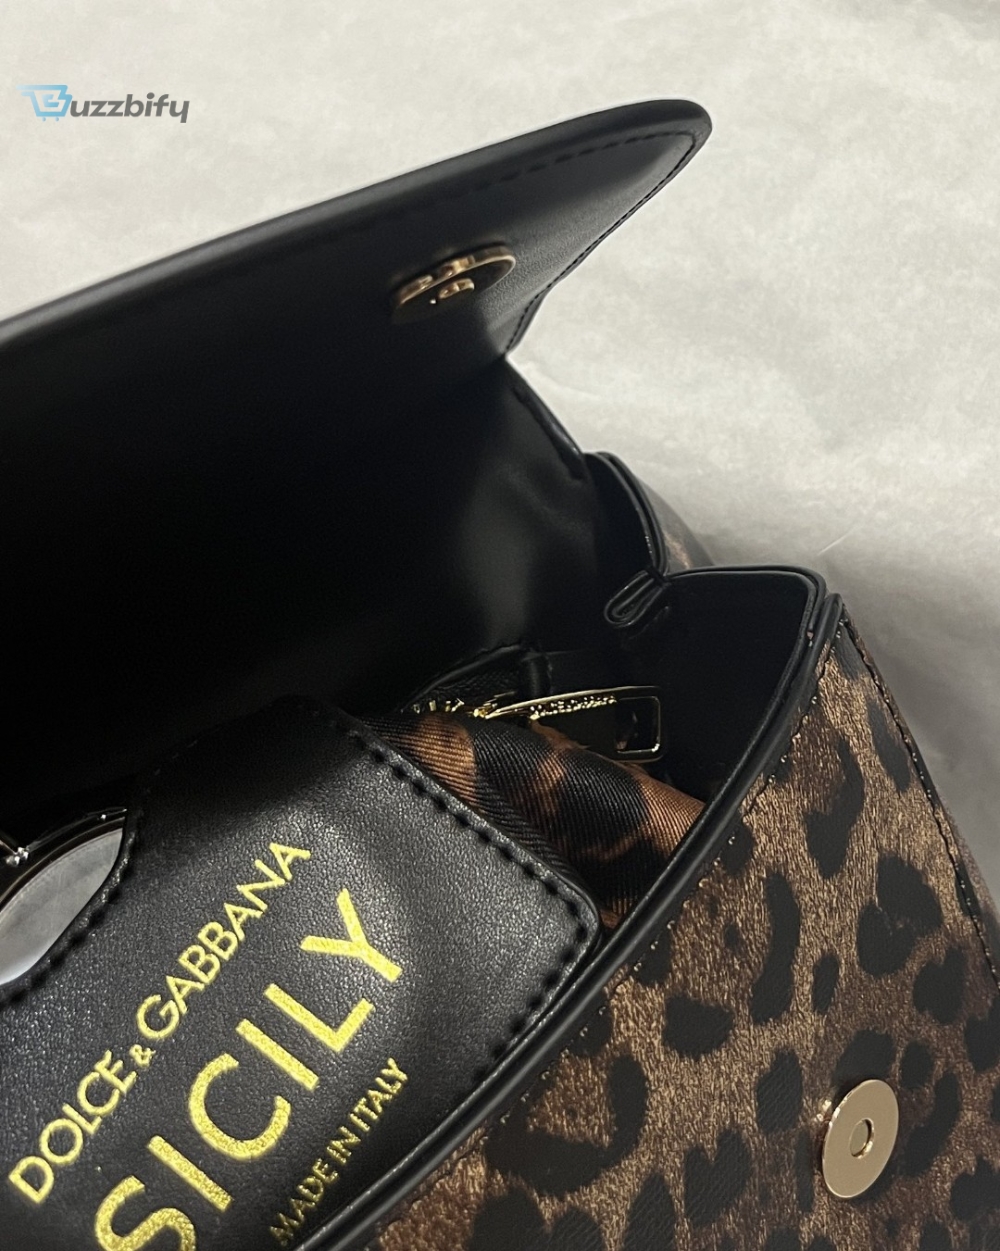 Dolce & Gabbana Sicily Bag In Leopard-Print Pony Hair Multicolour For Women 10.2in/26cm DG 